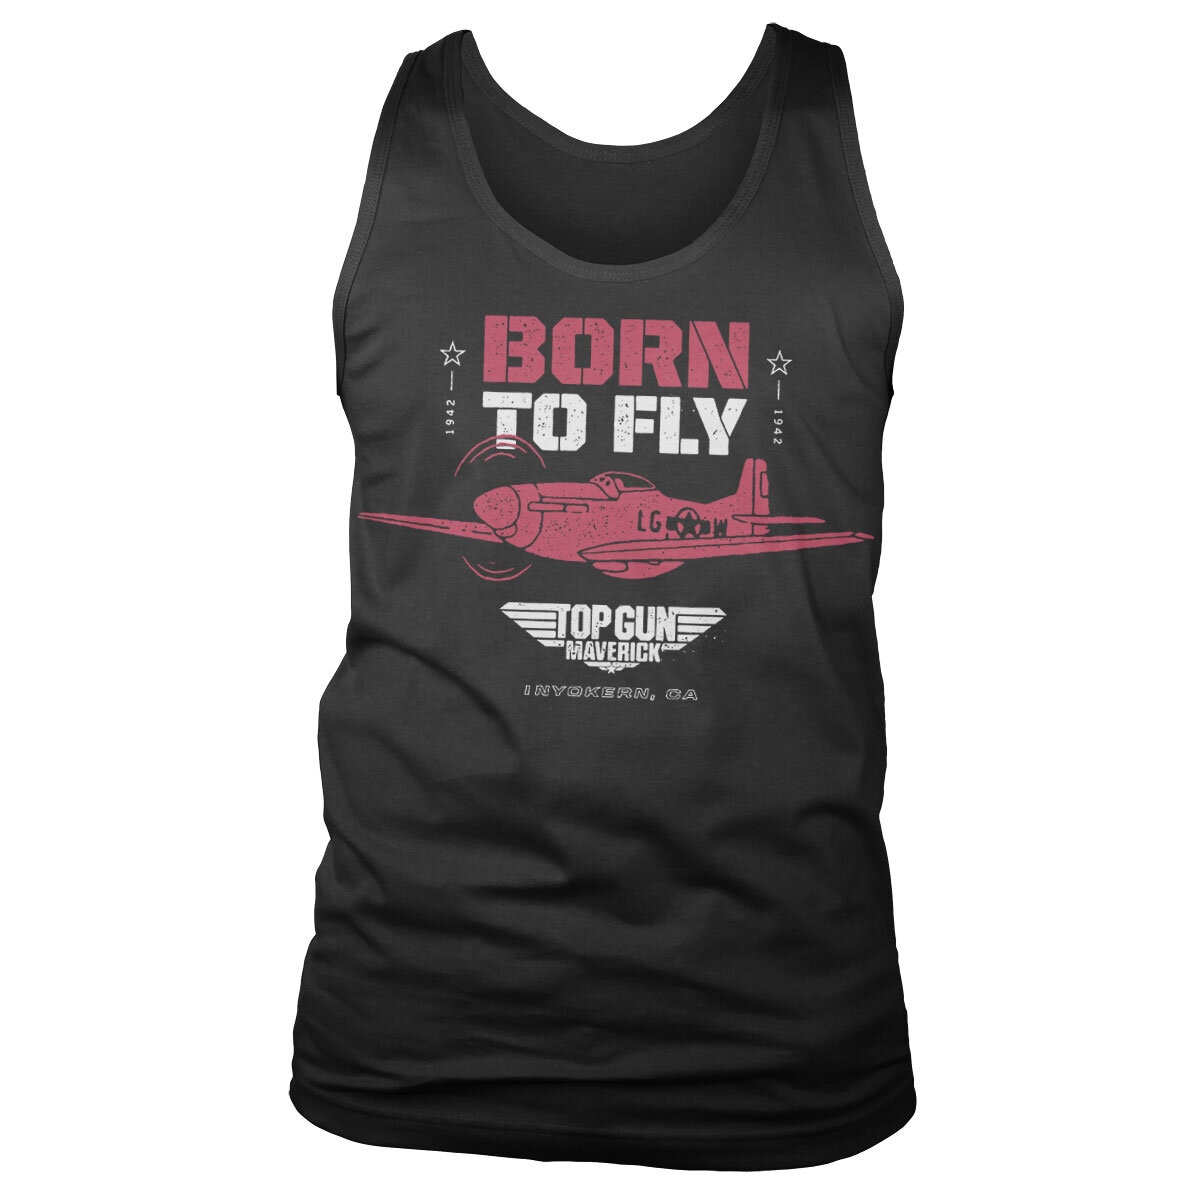 Top Gun - Born To Fly Tank Top